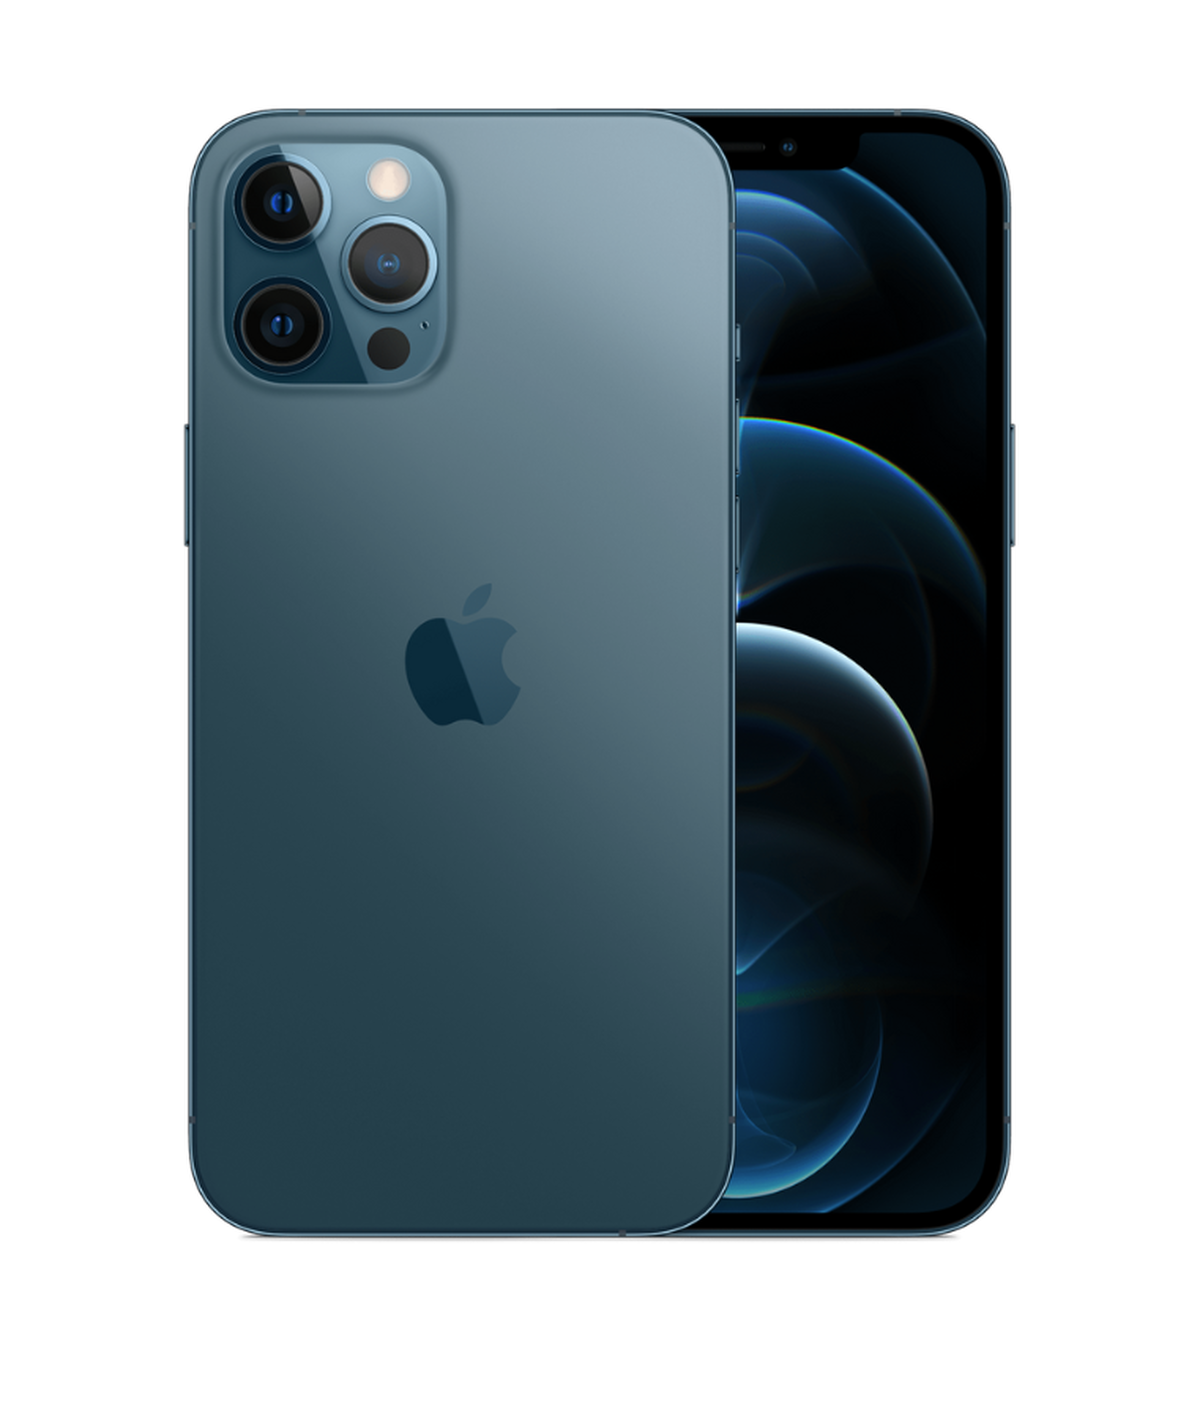 iphone 12 pro max blue hero - iPhone 12 Pro Max price in Nigeria, details, and Full specs